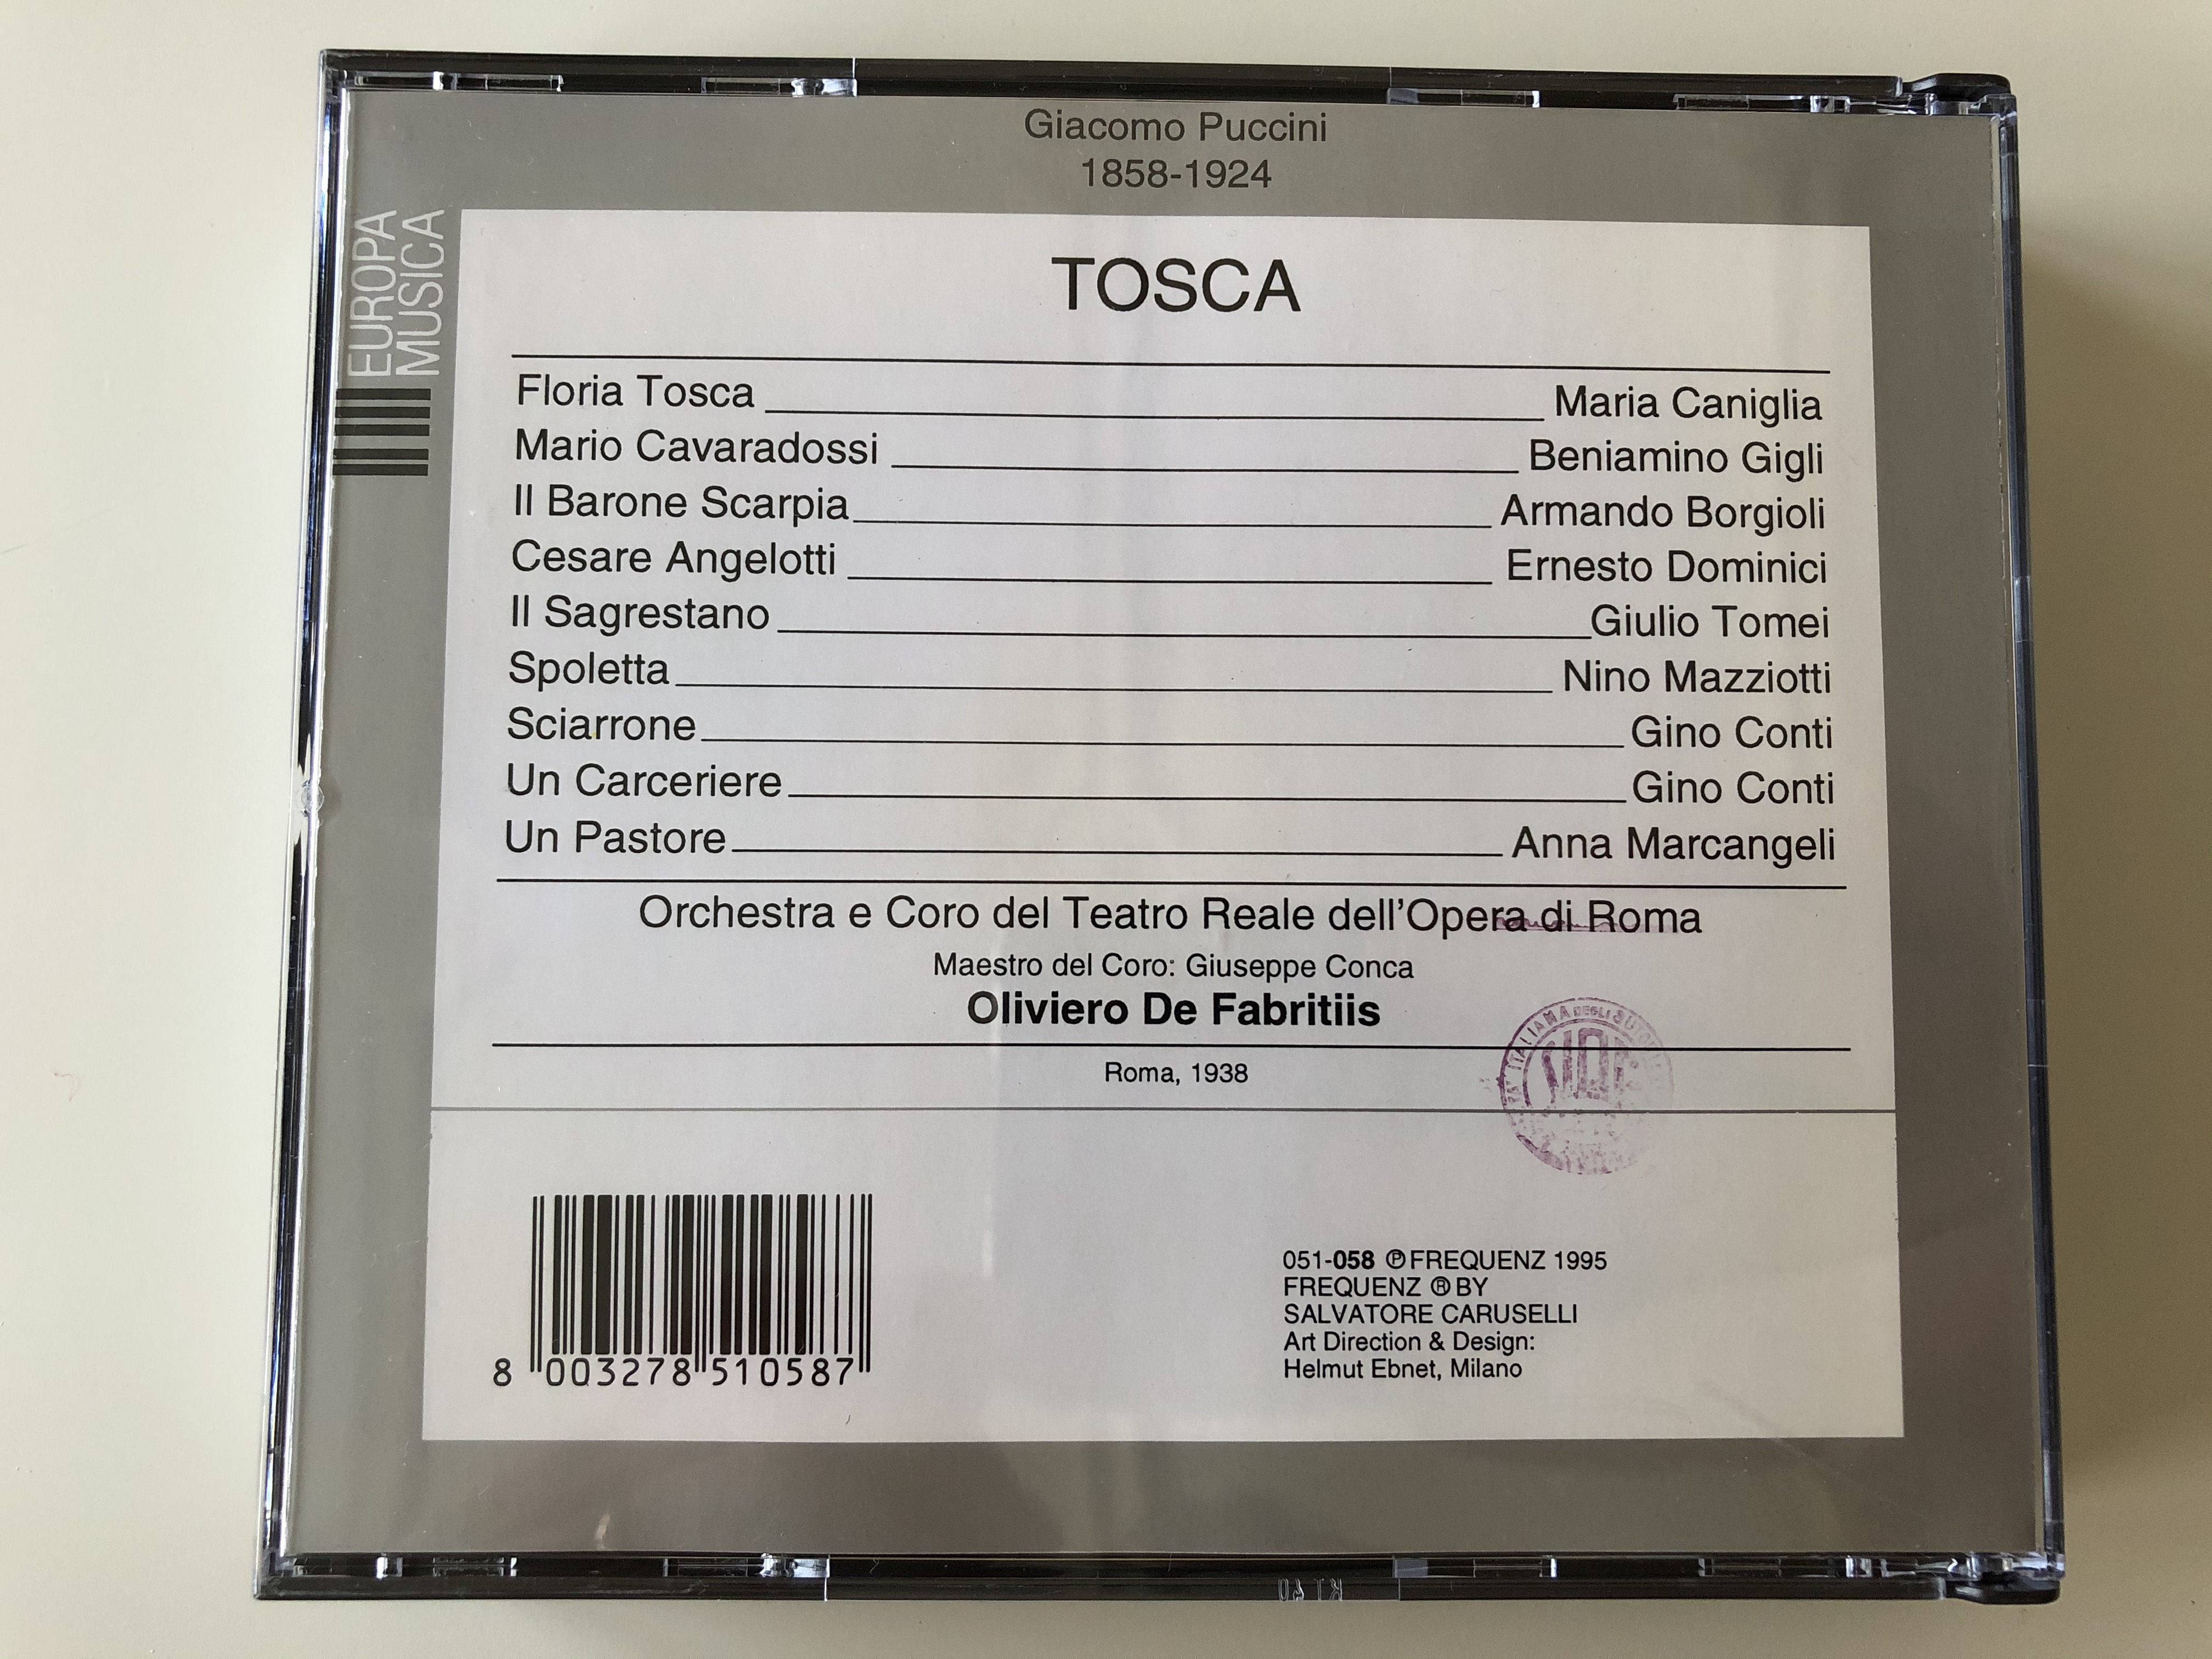 puccini-maria-caniglia-tosca-europa-musica-2x-audio-cd-1995-stereo-051-058-8-.jpg